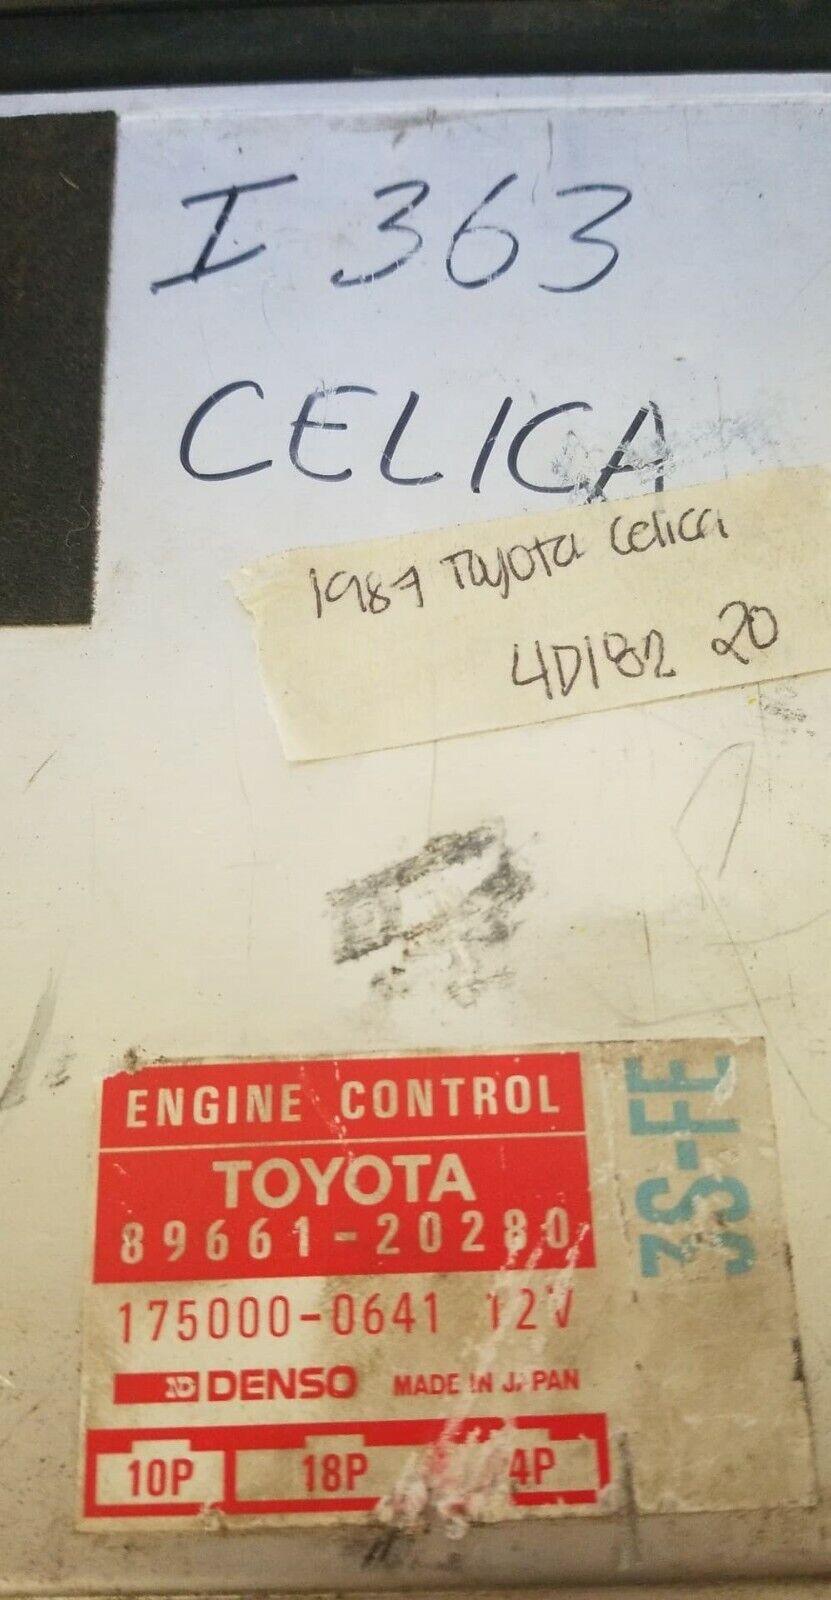 1987 Toyota Celica ecu ecm computer 89661-20280.